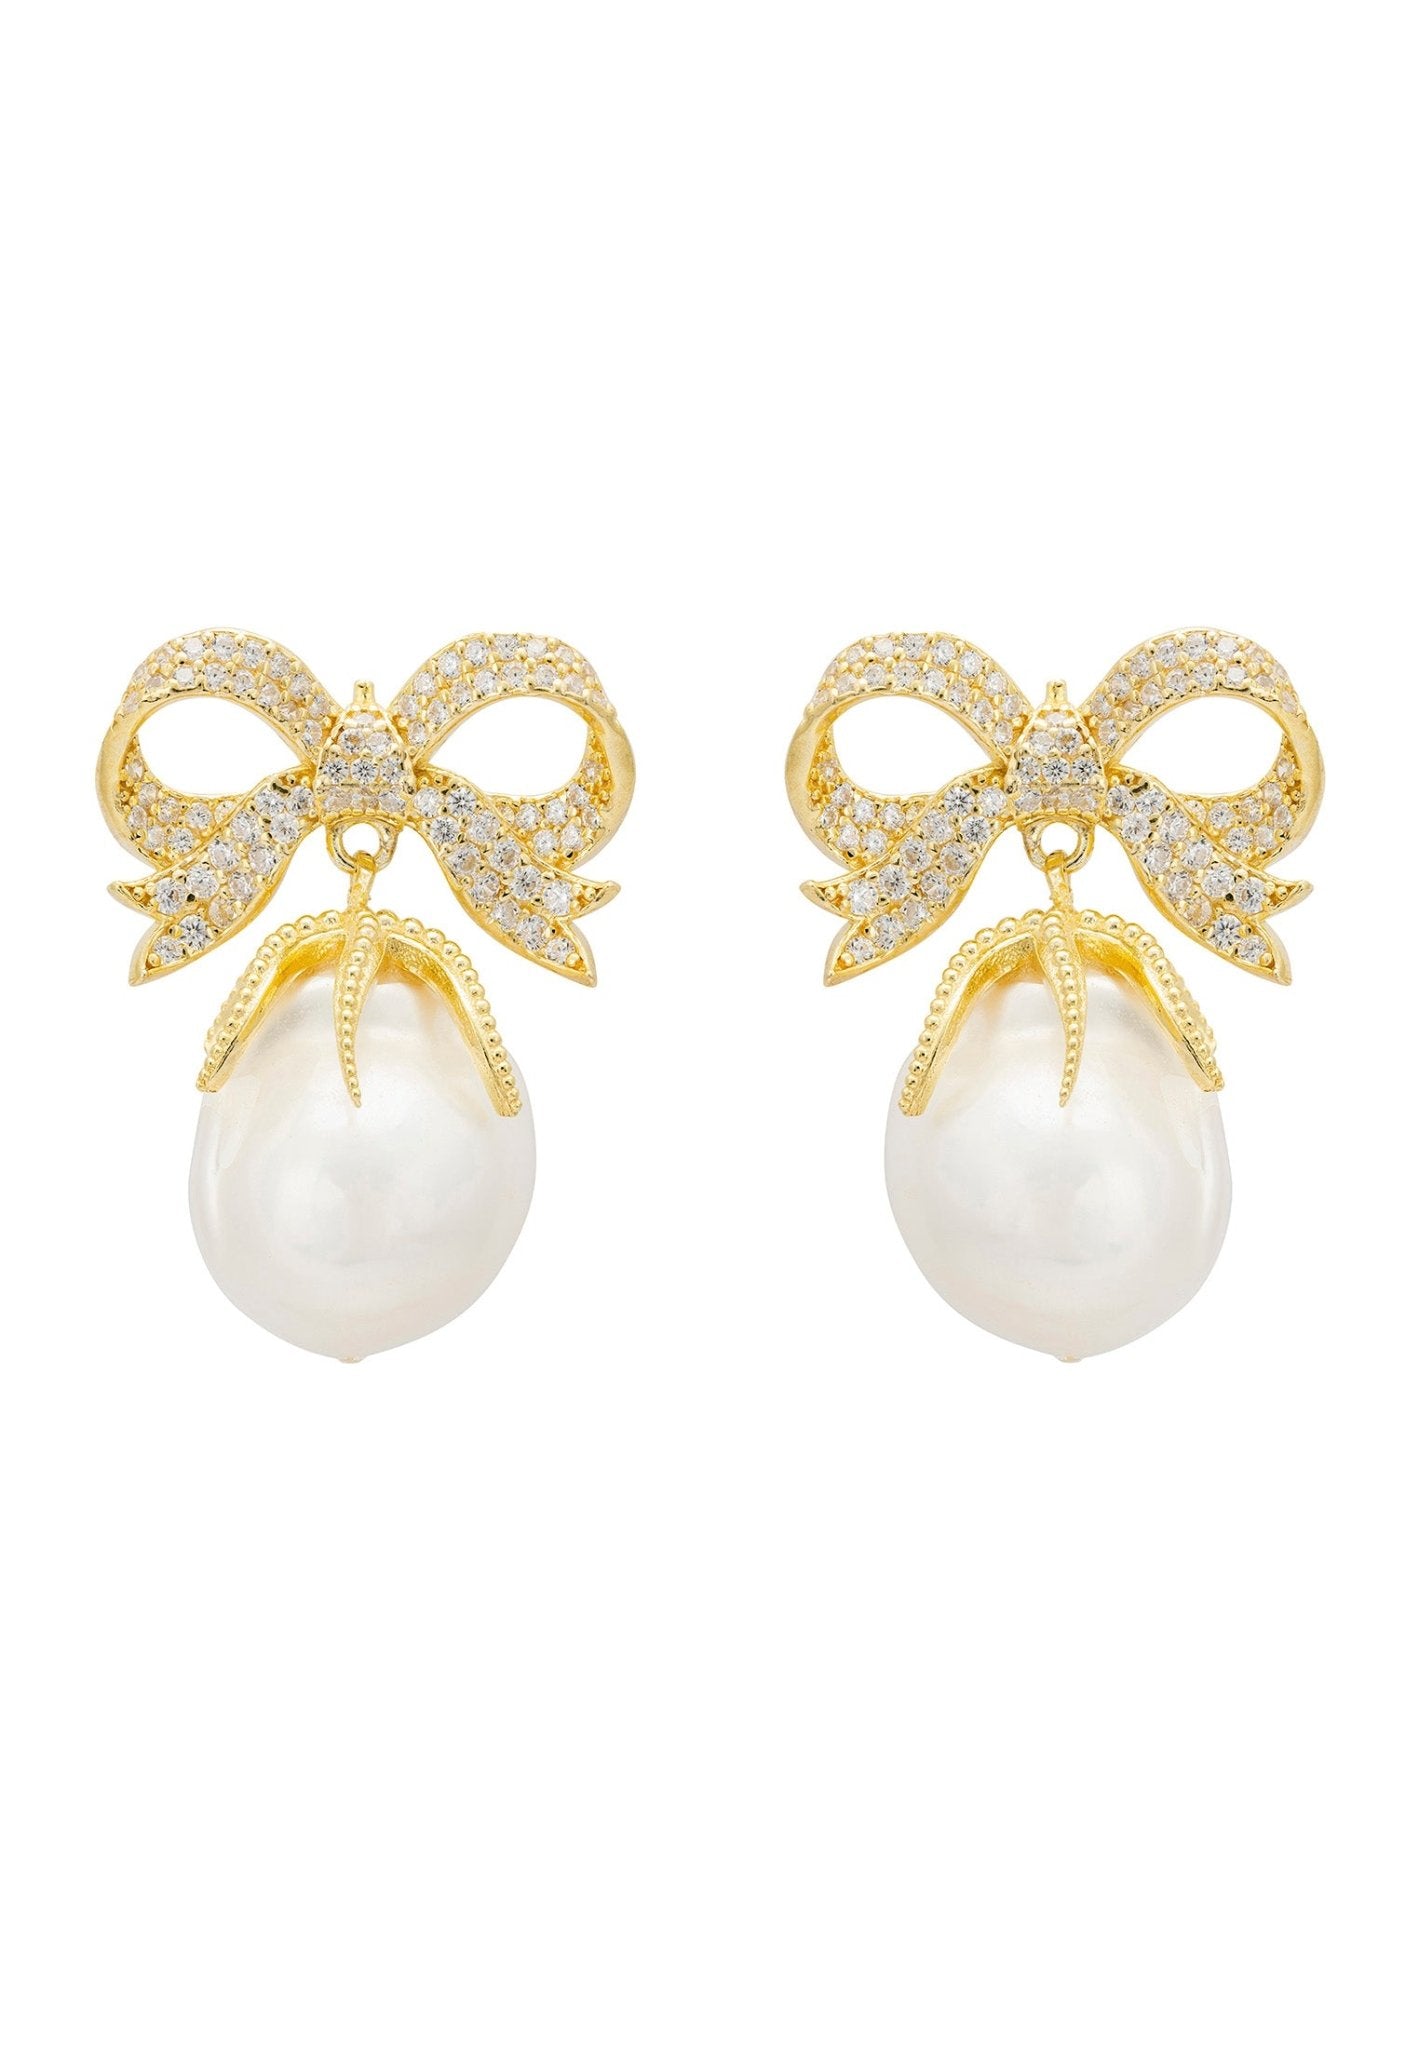 Baroque Pearl Ribbon And Bows Drop Earrings Gold - LATELITA Earrings